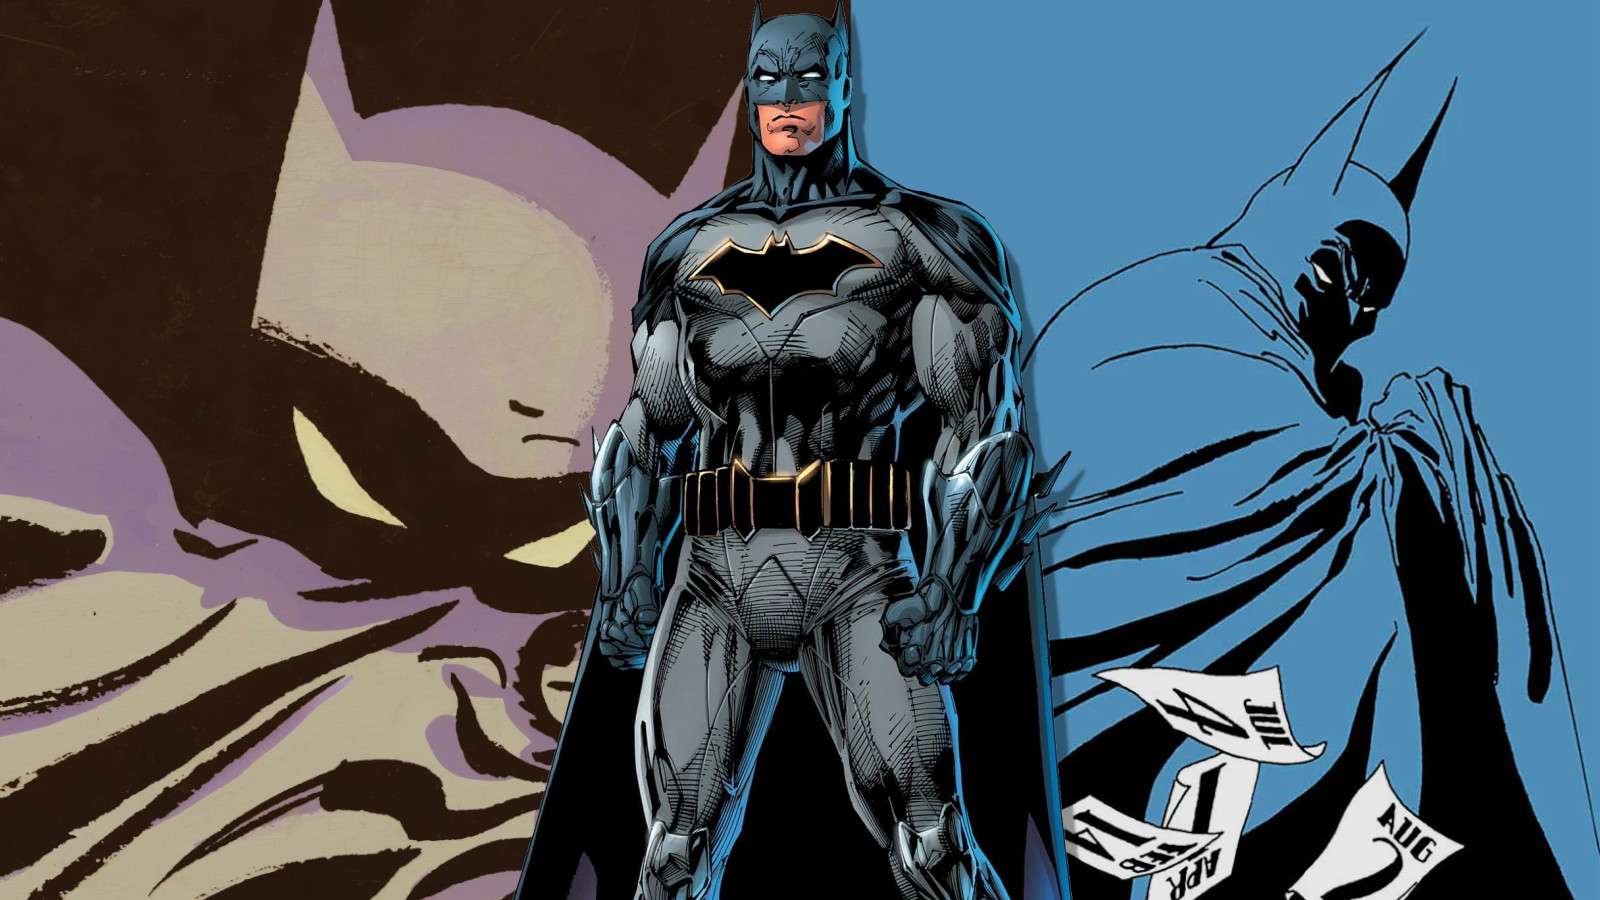 Batman as depicted by DC Comics